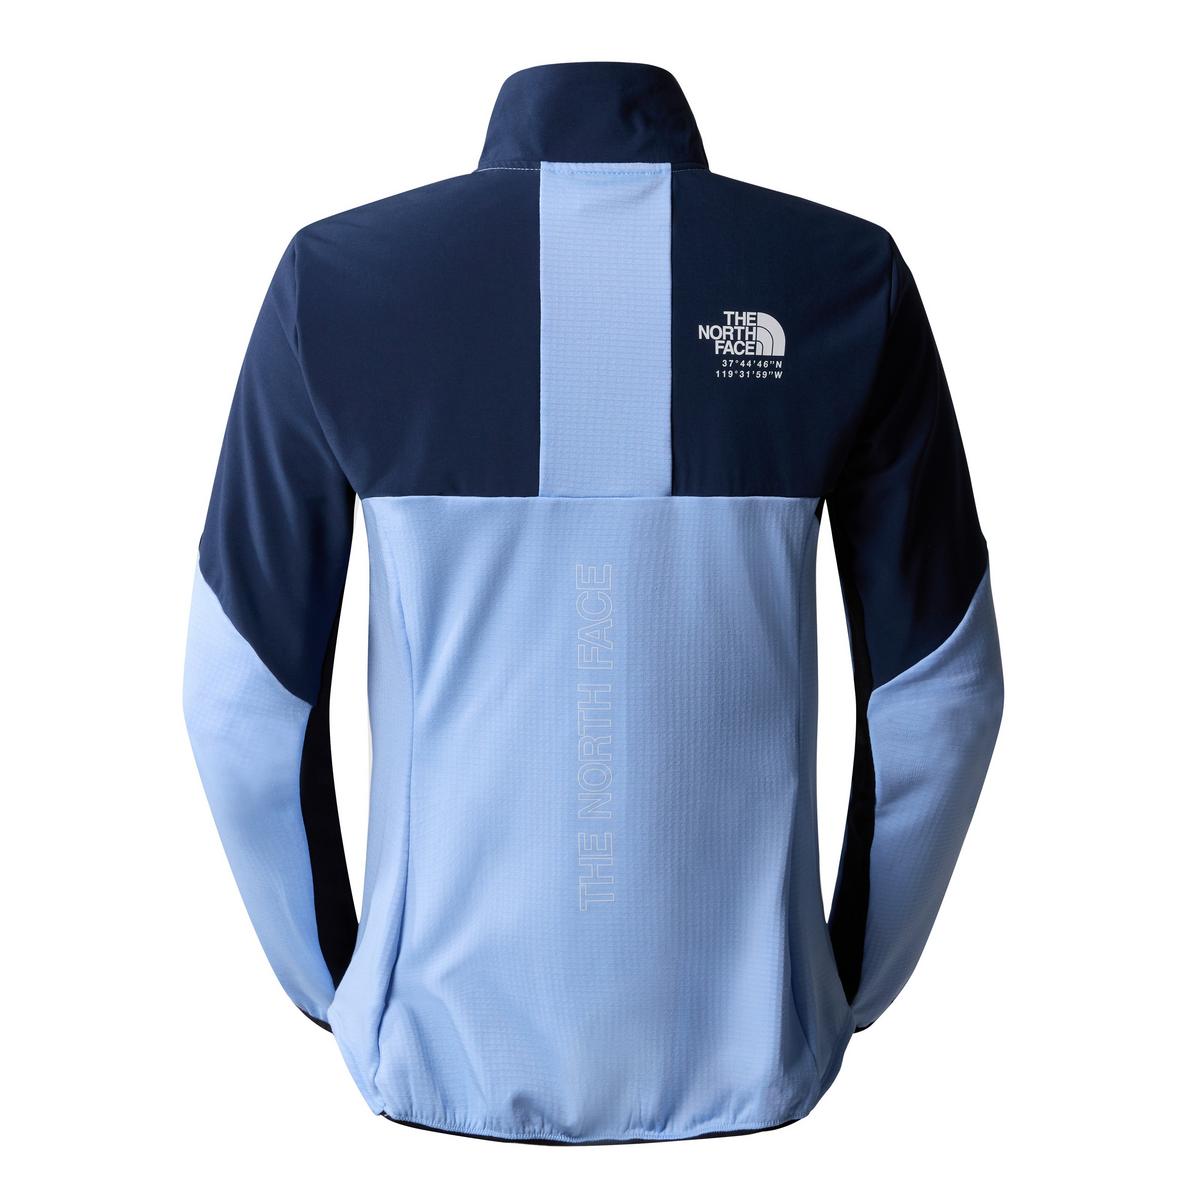 The North Face Denali Jacket (Acoustic Blue)